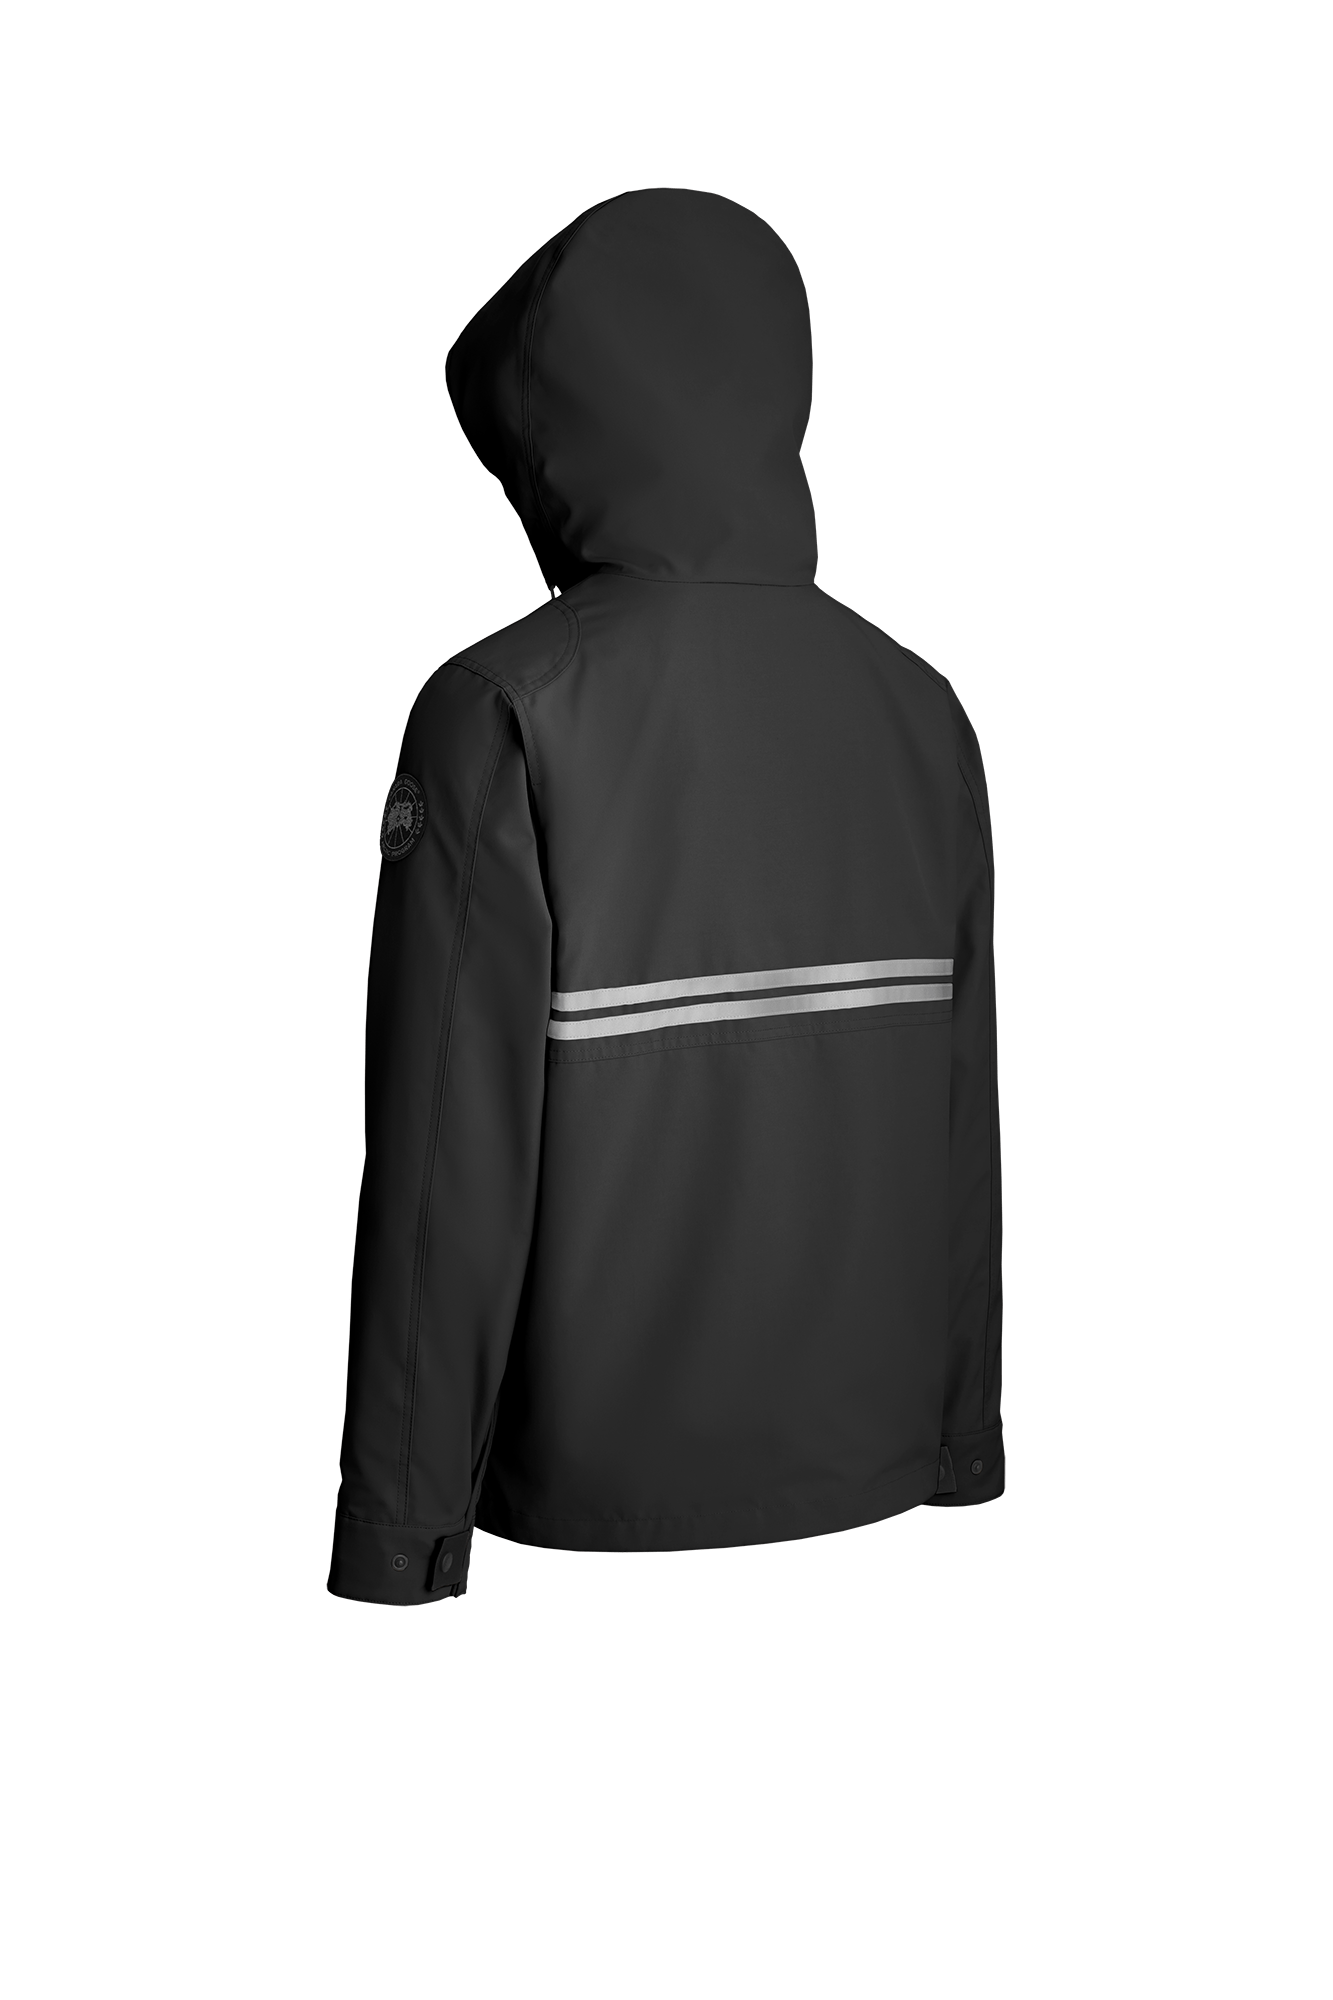 Lockeport Jacket Black Label